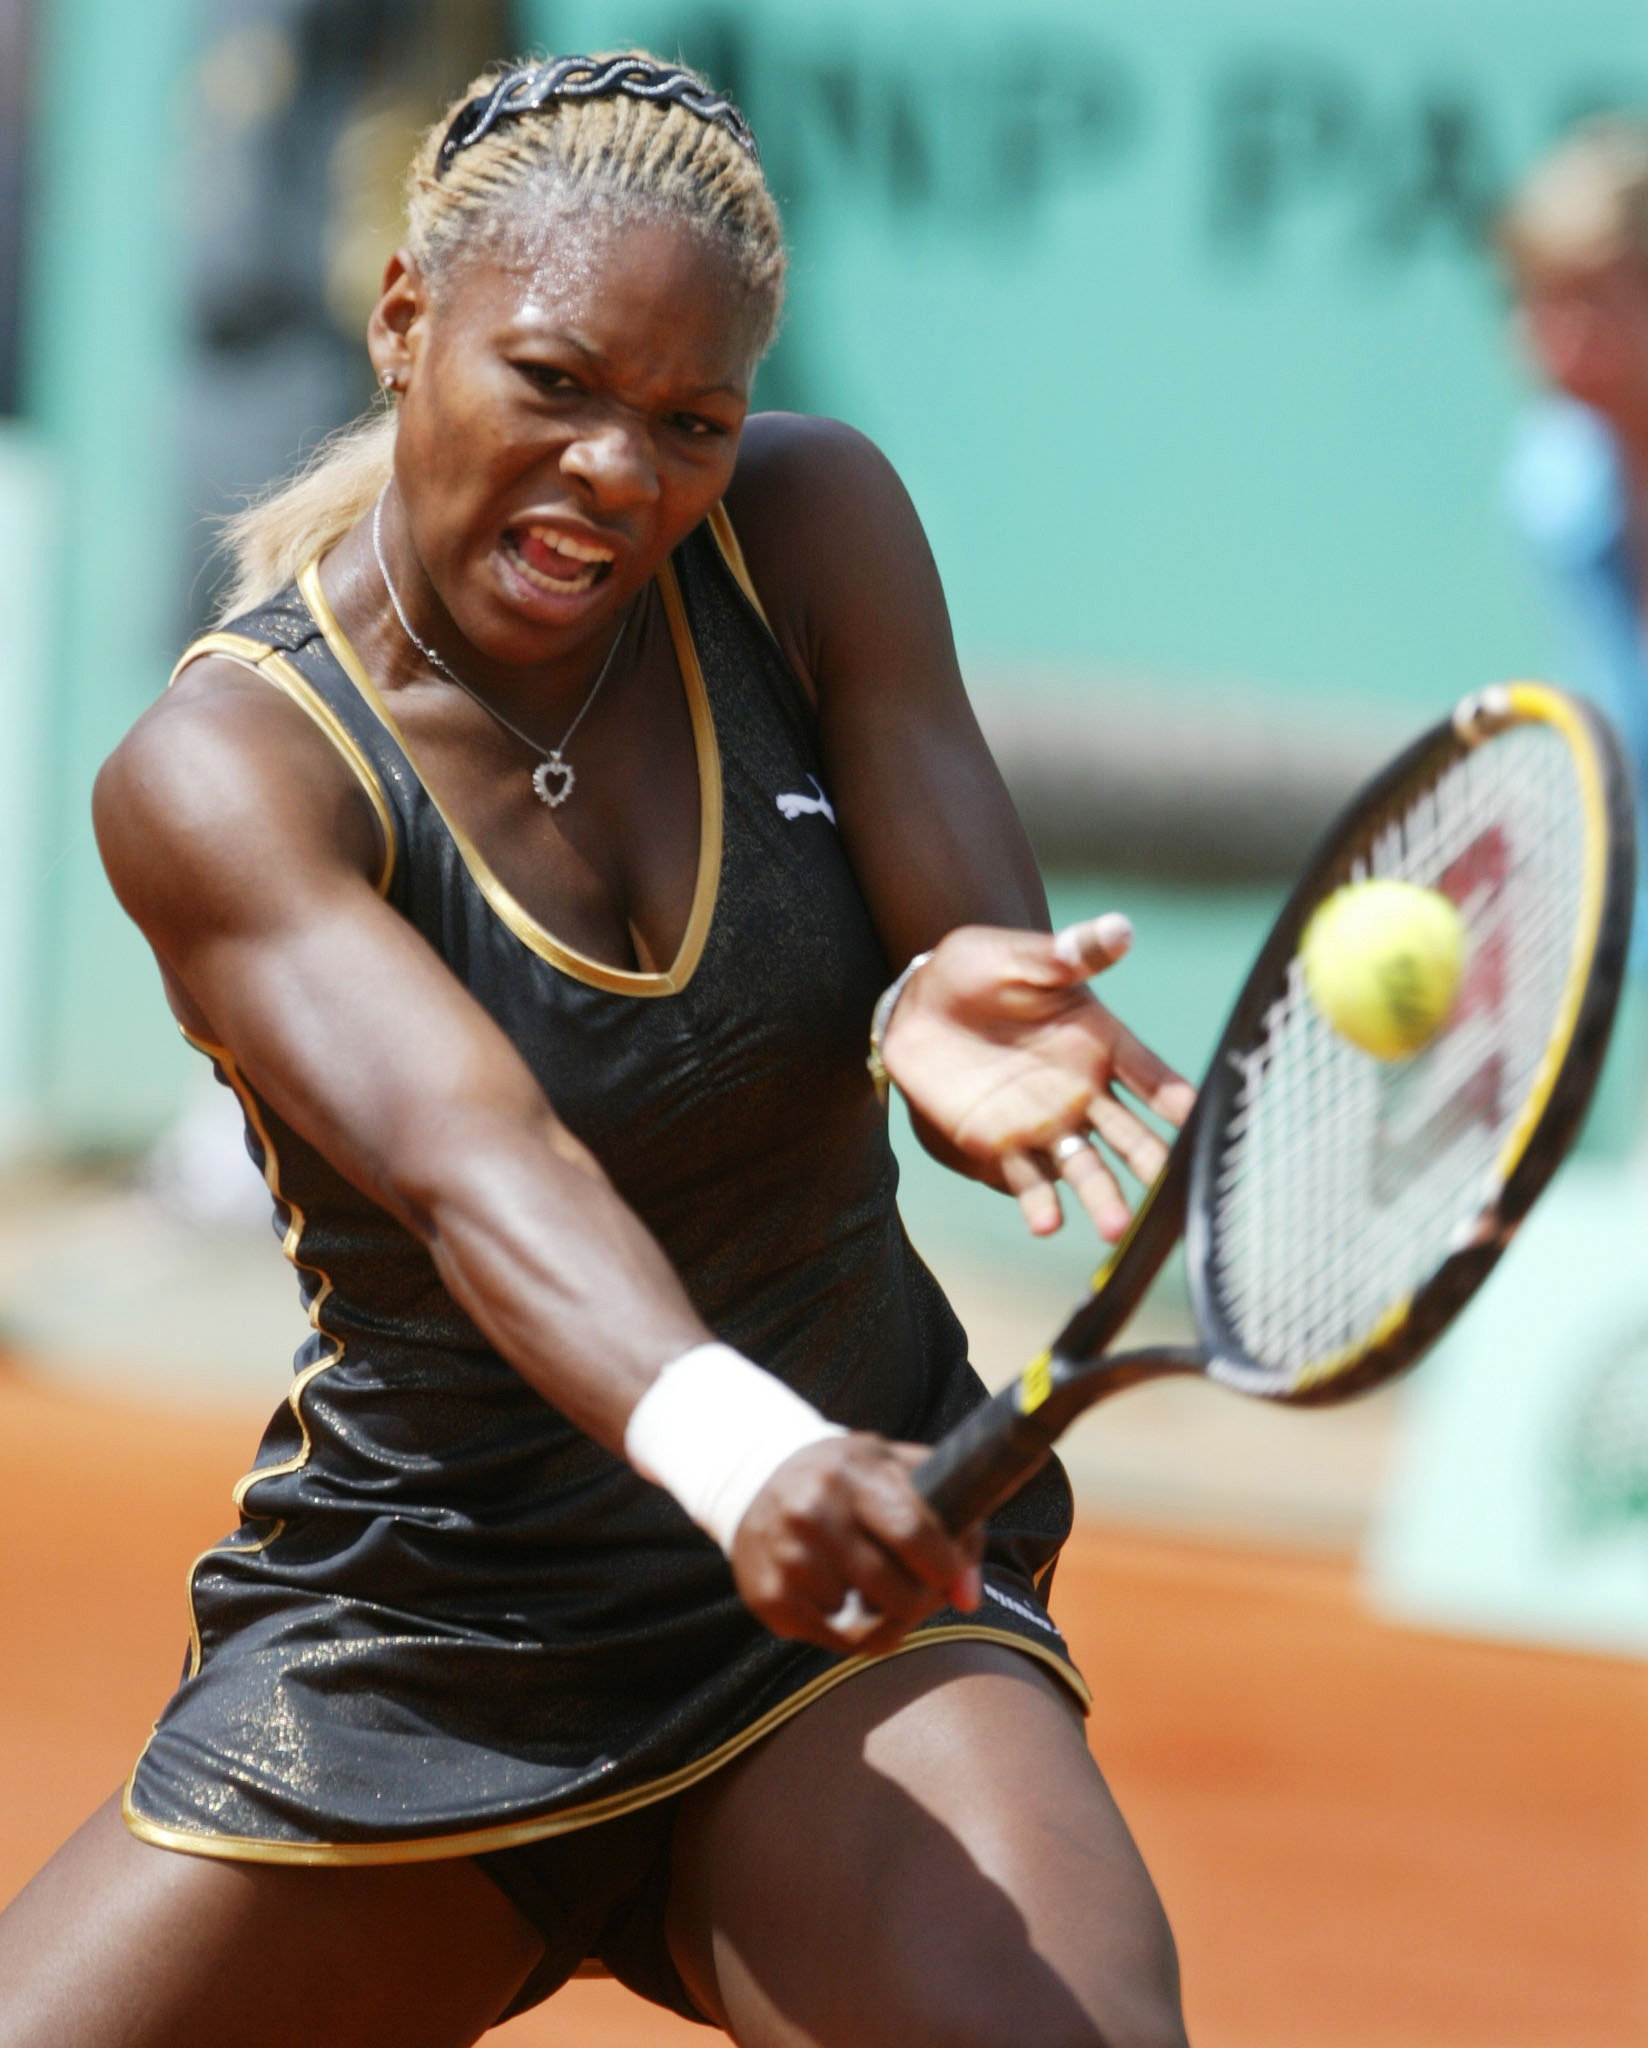 Grand Slam Grow Up: See Serena Williams' Iconic Moments - NBC News